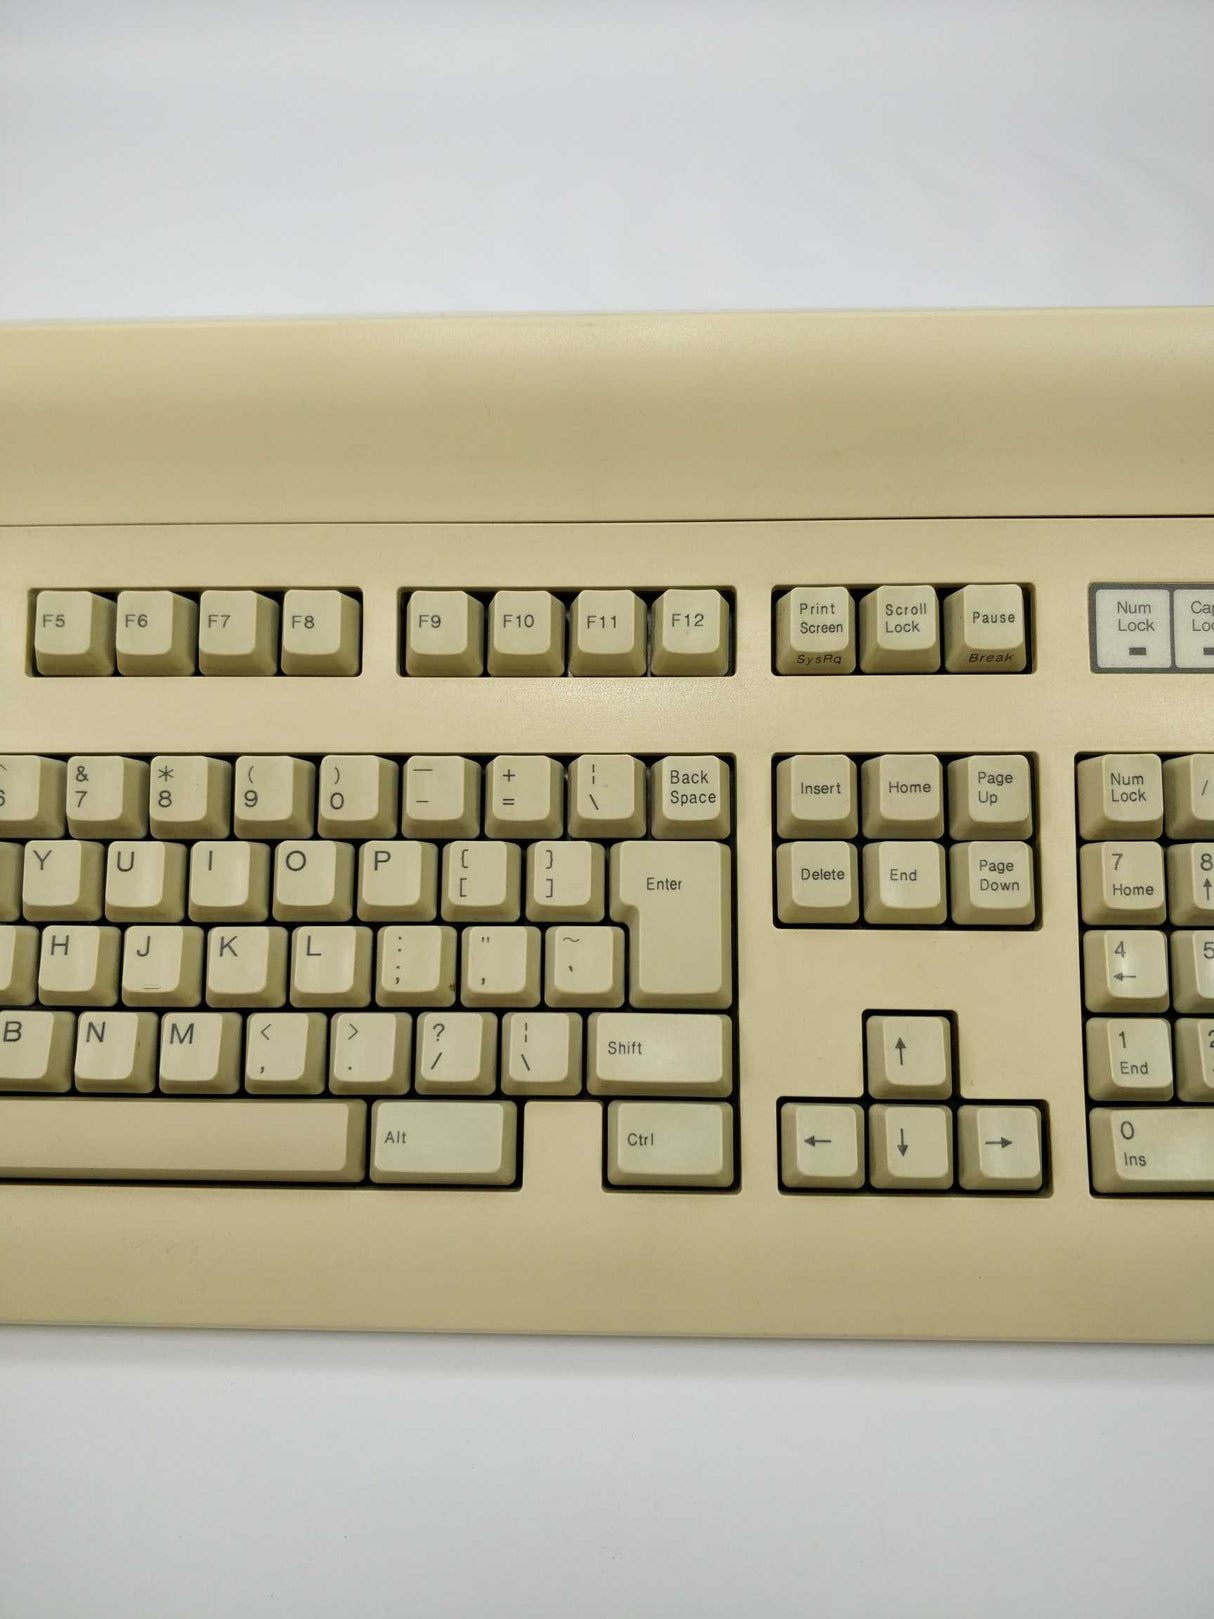 Toshiba N860-8533-T002 S/N R2000779t Keyboard